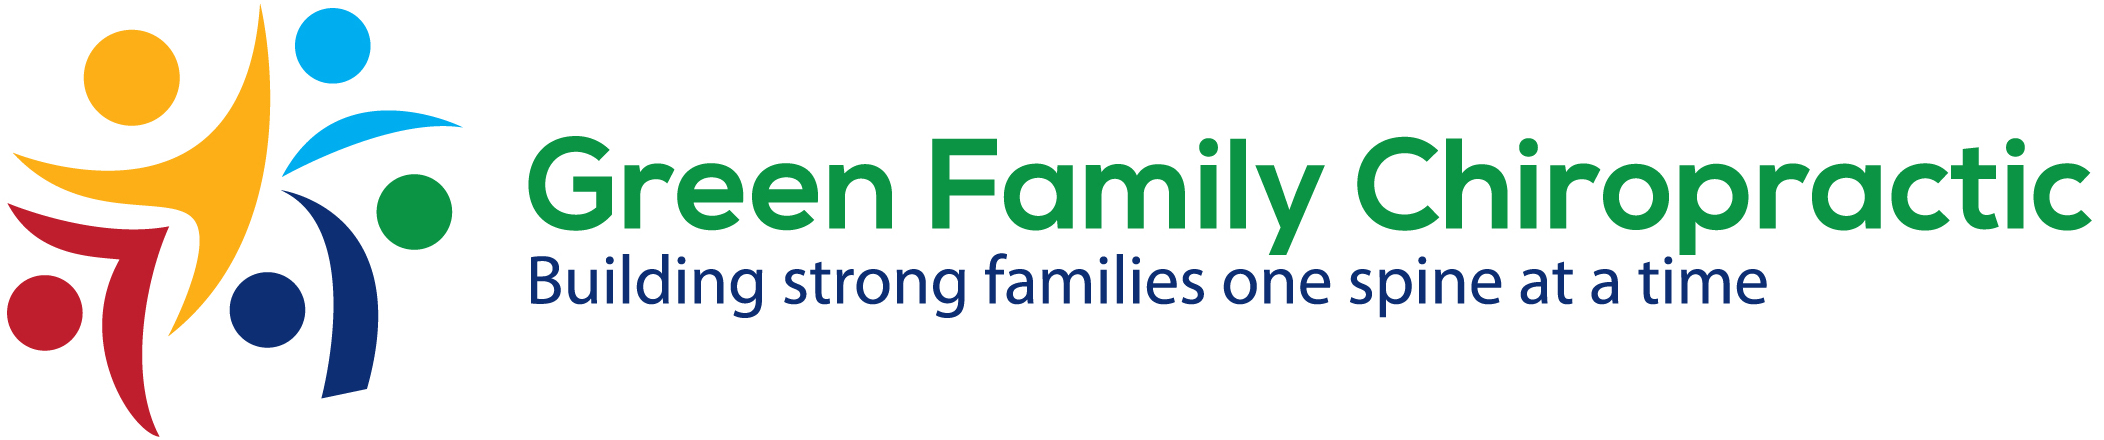 Green Family Chiropractic logo